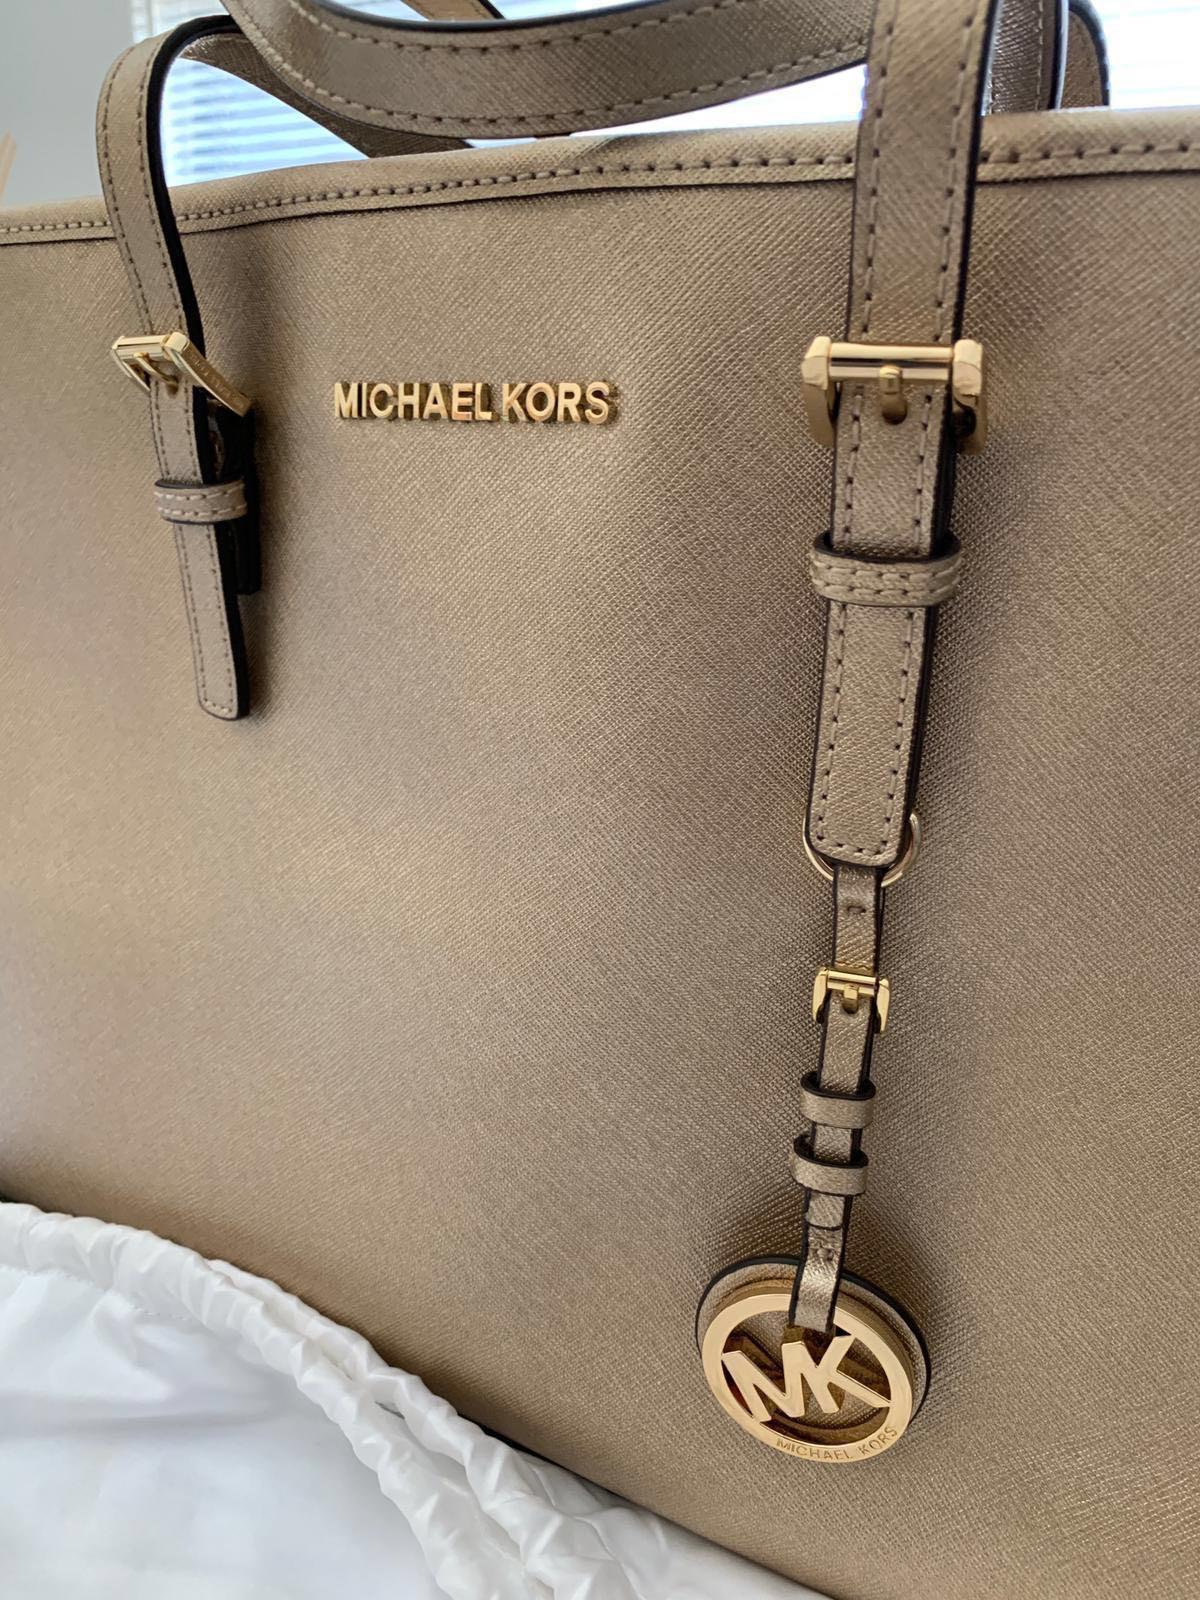 michael kors handbags laptop